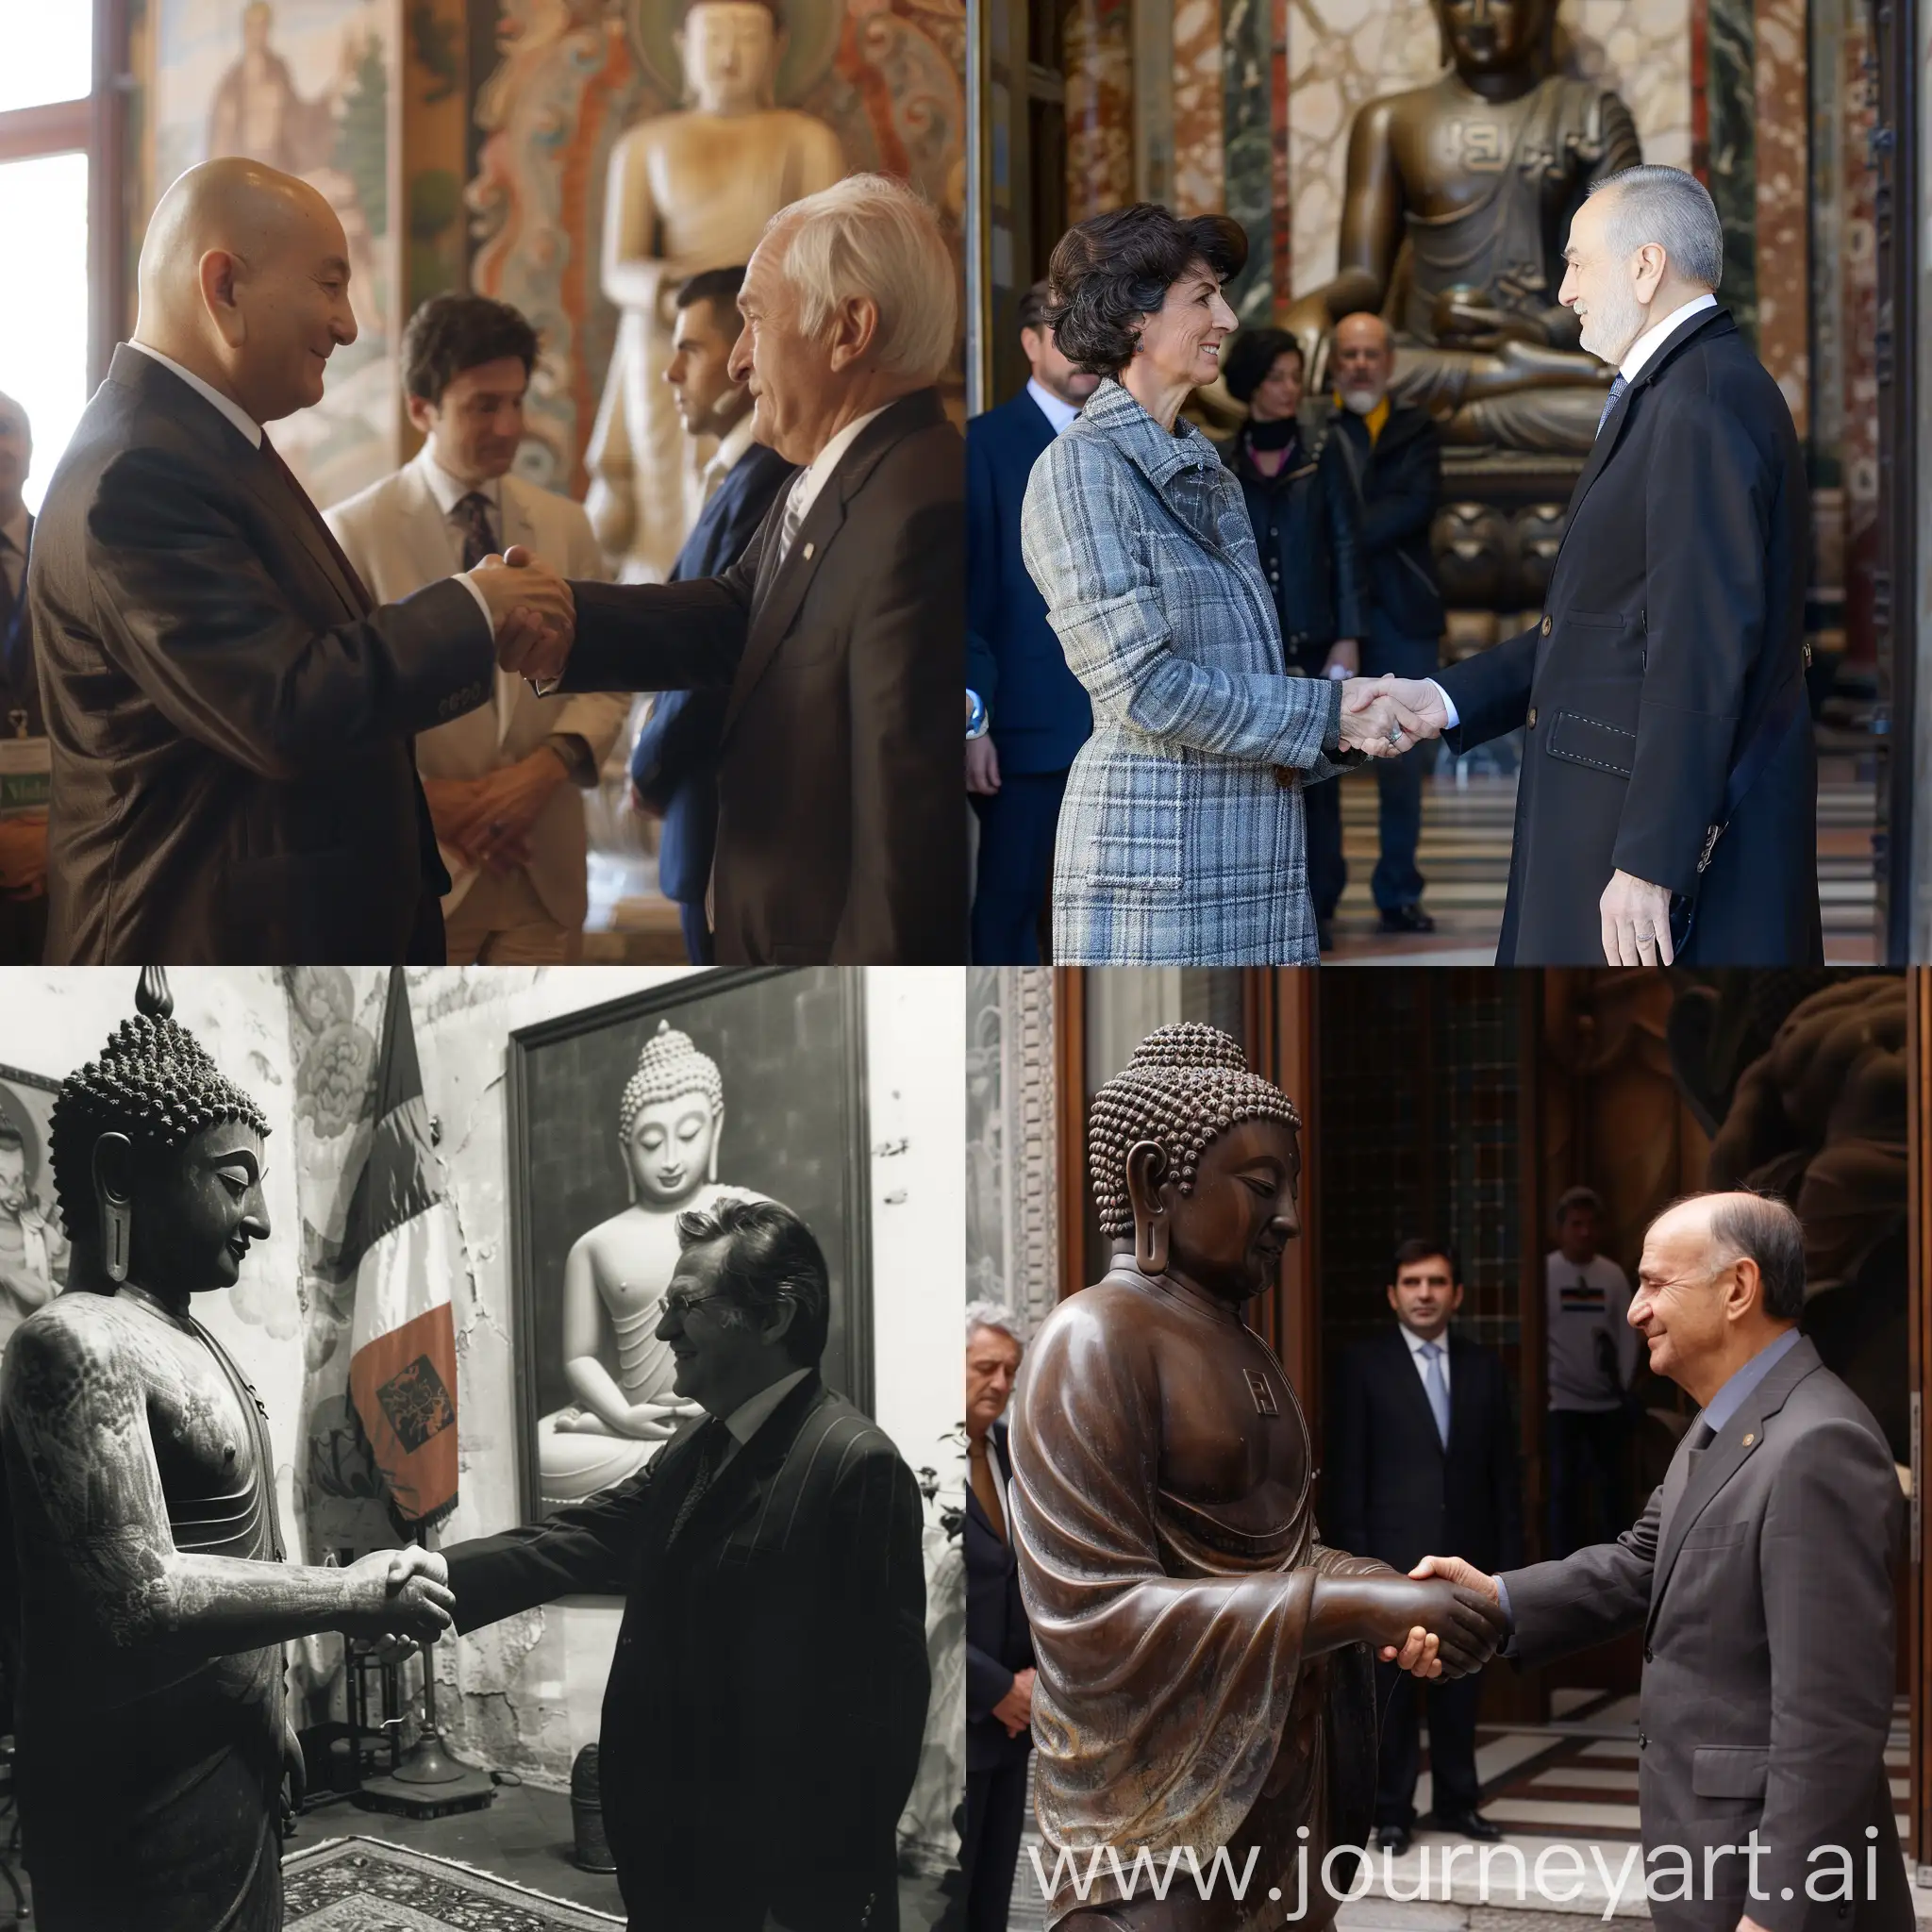 Buddha-and-Italian-Prime-Minister-Giorgia-Meloni-Exchange-Greetings